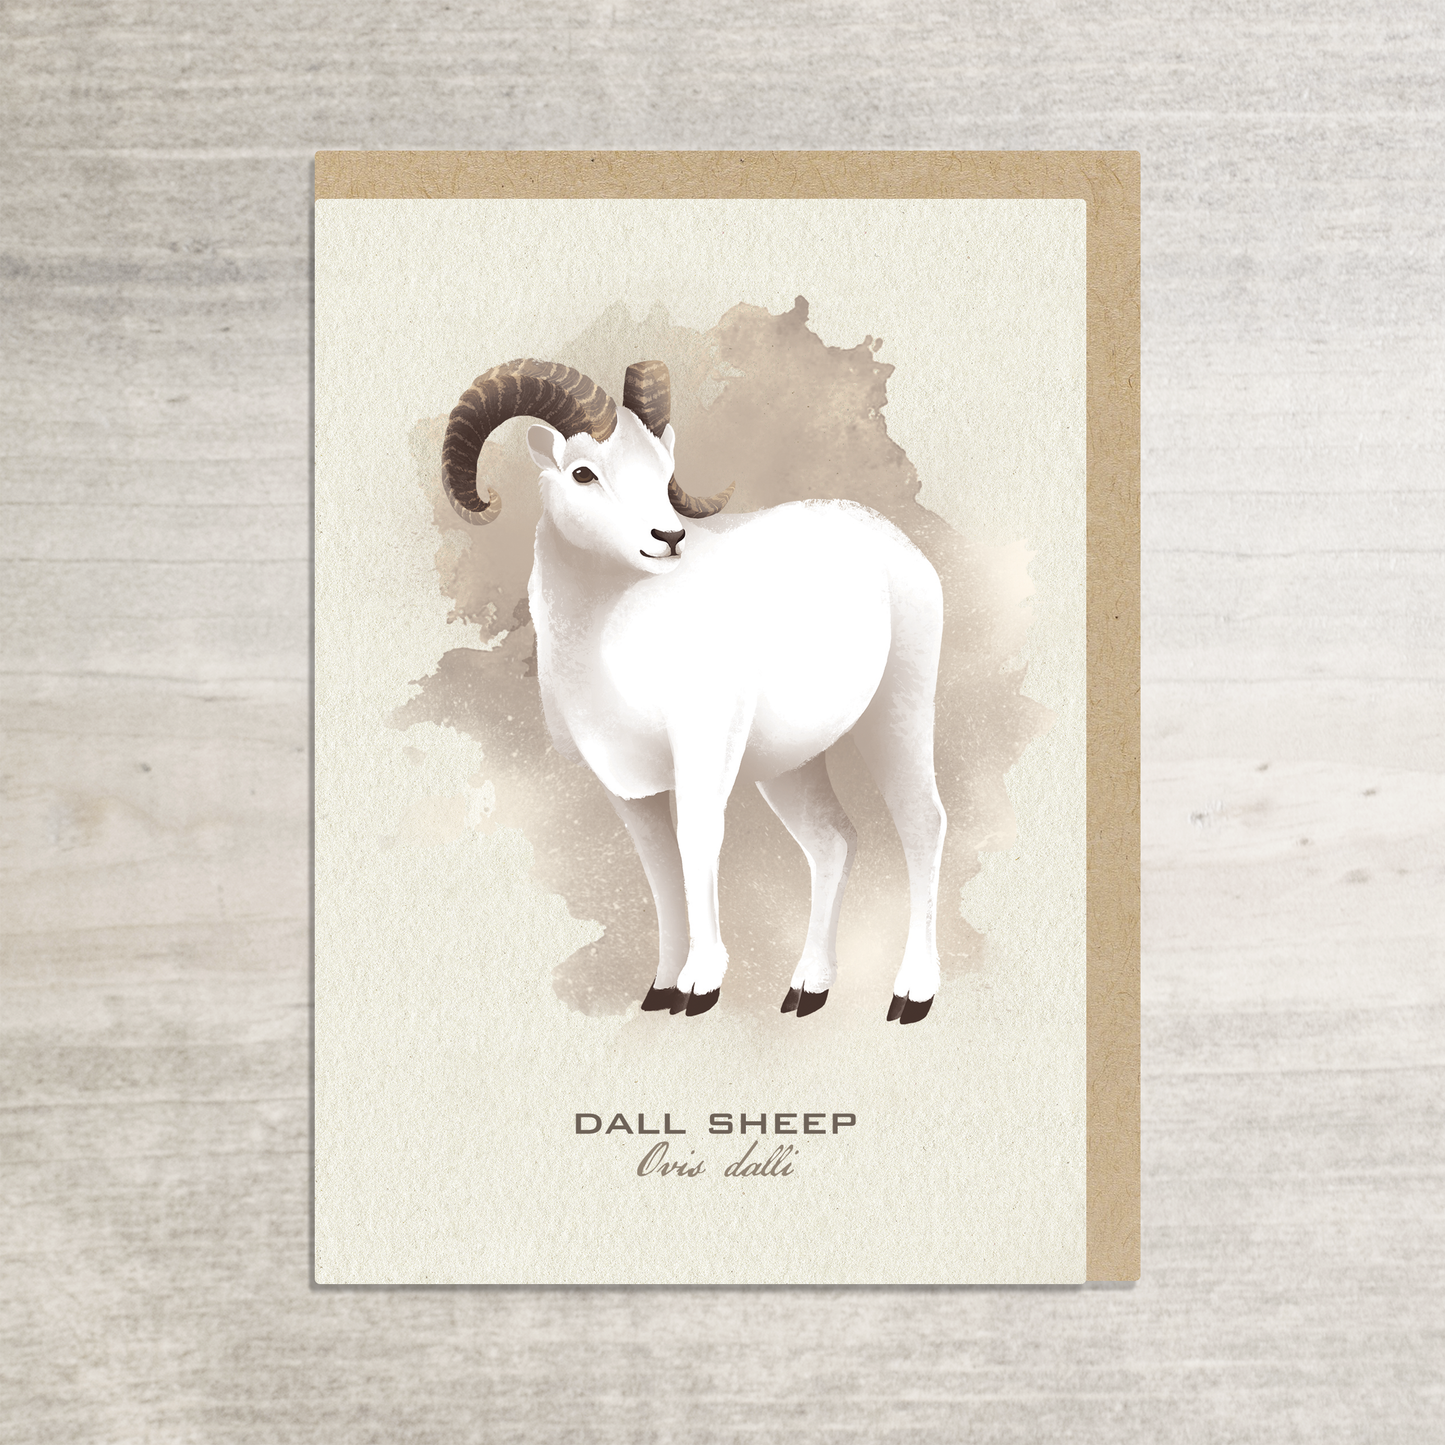 Dall Sheep Greeting Card || A6